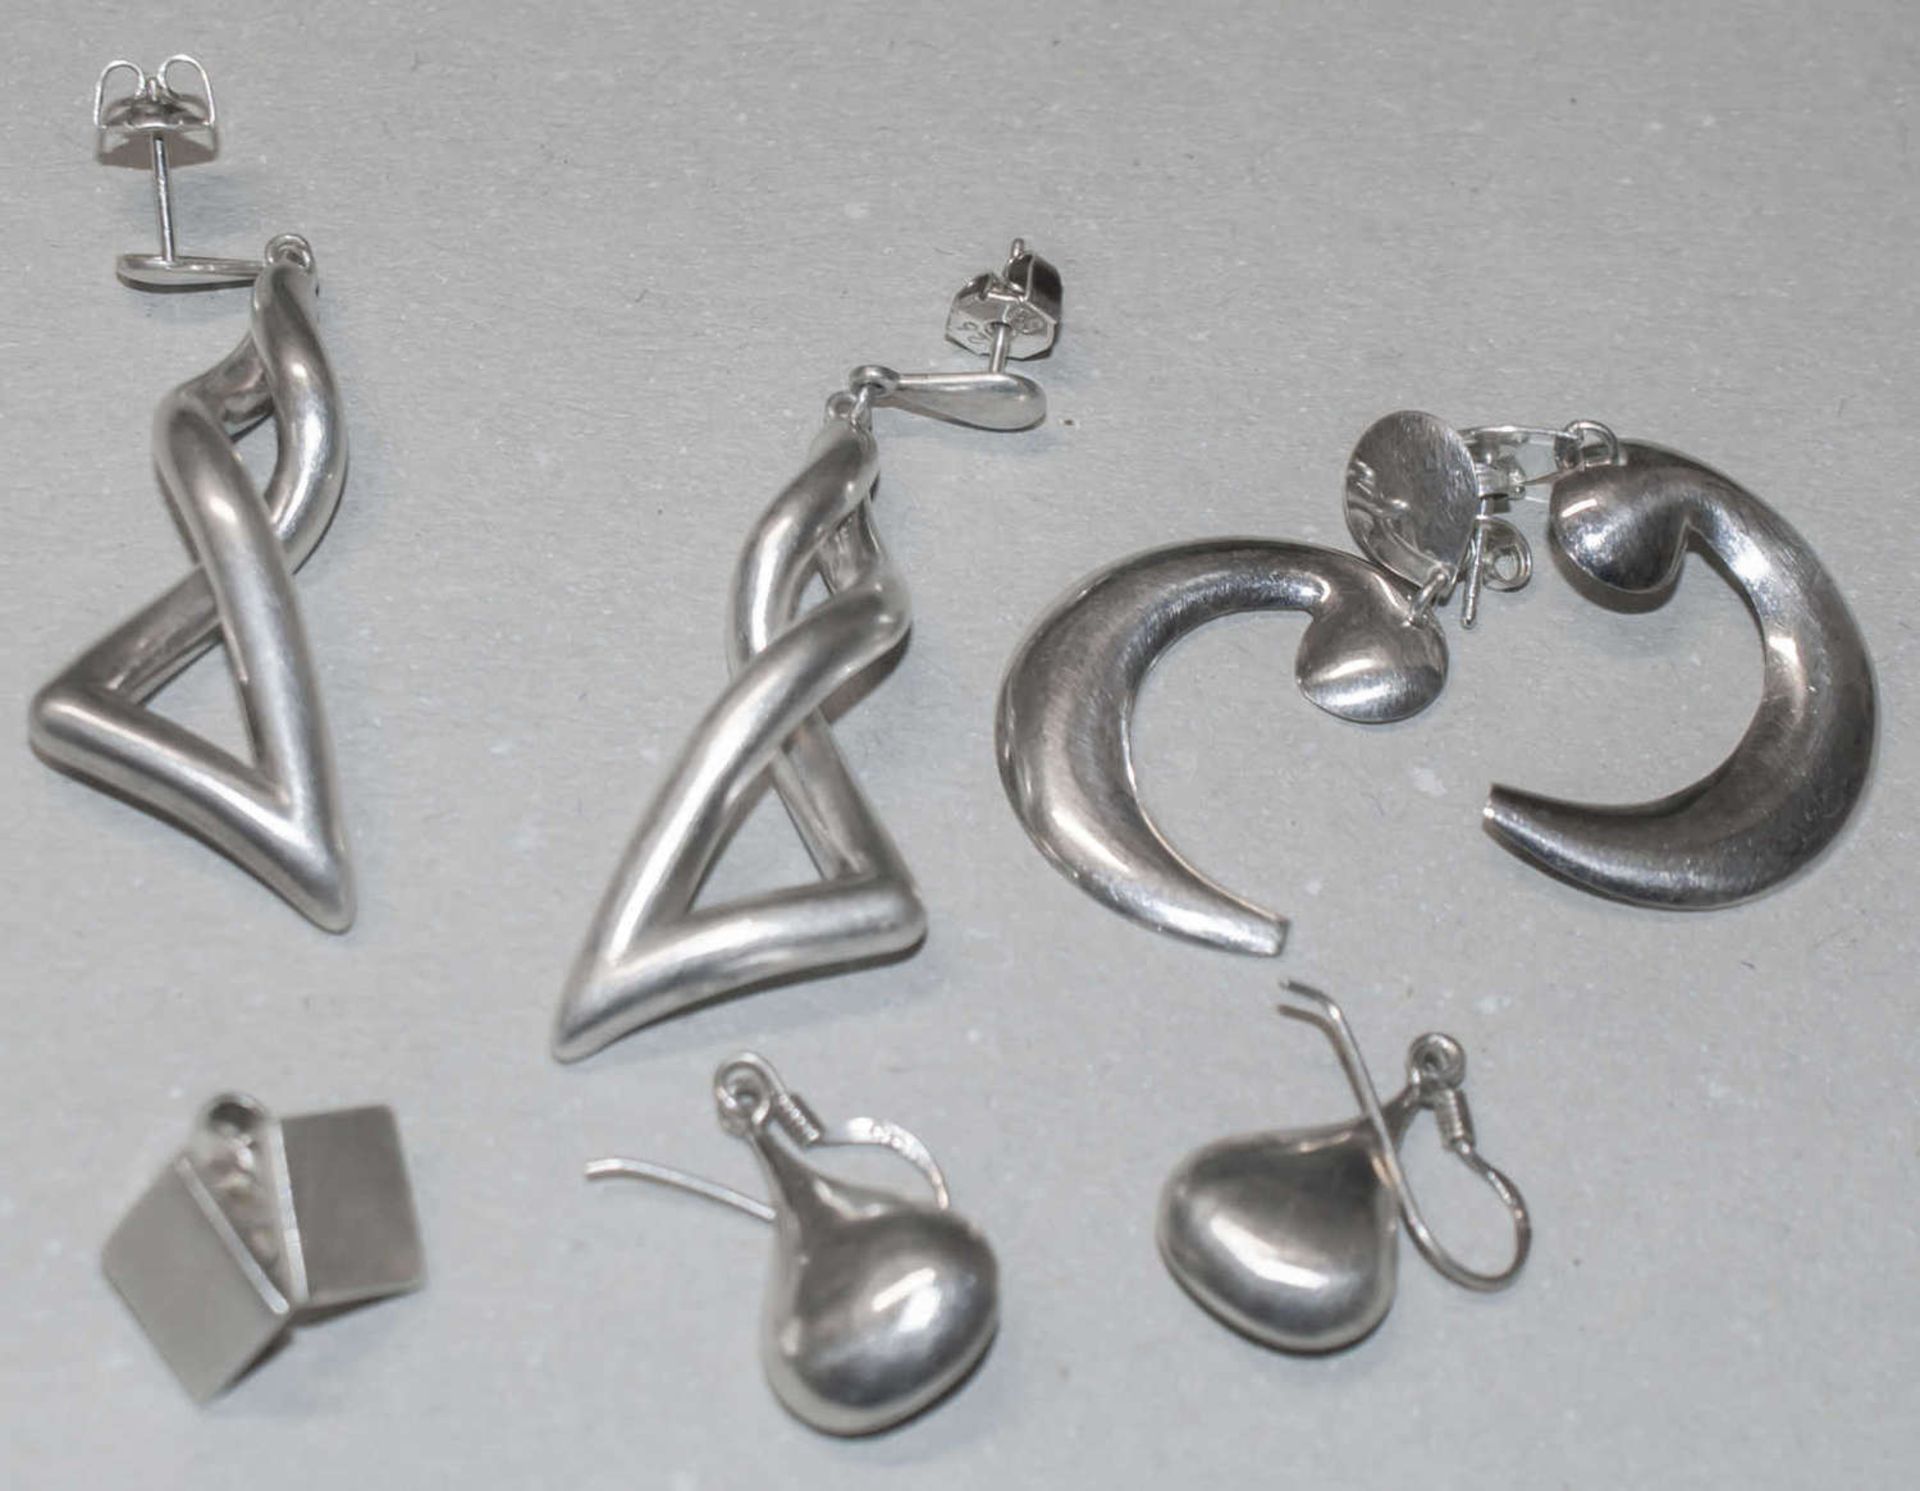 Lot Silberohrringe, verschiedene Modelle, Insgesamt 4 Stück, Gewicht ca. 17,4g.Lot of silver